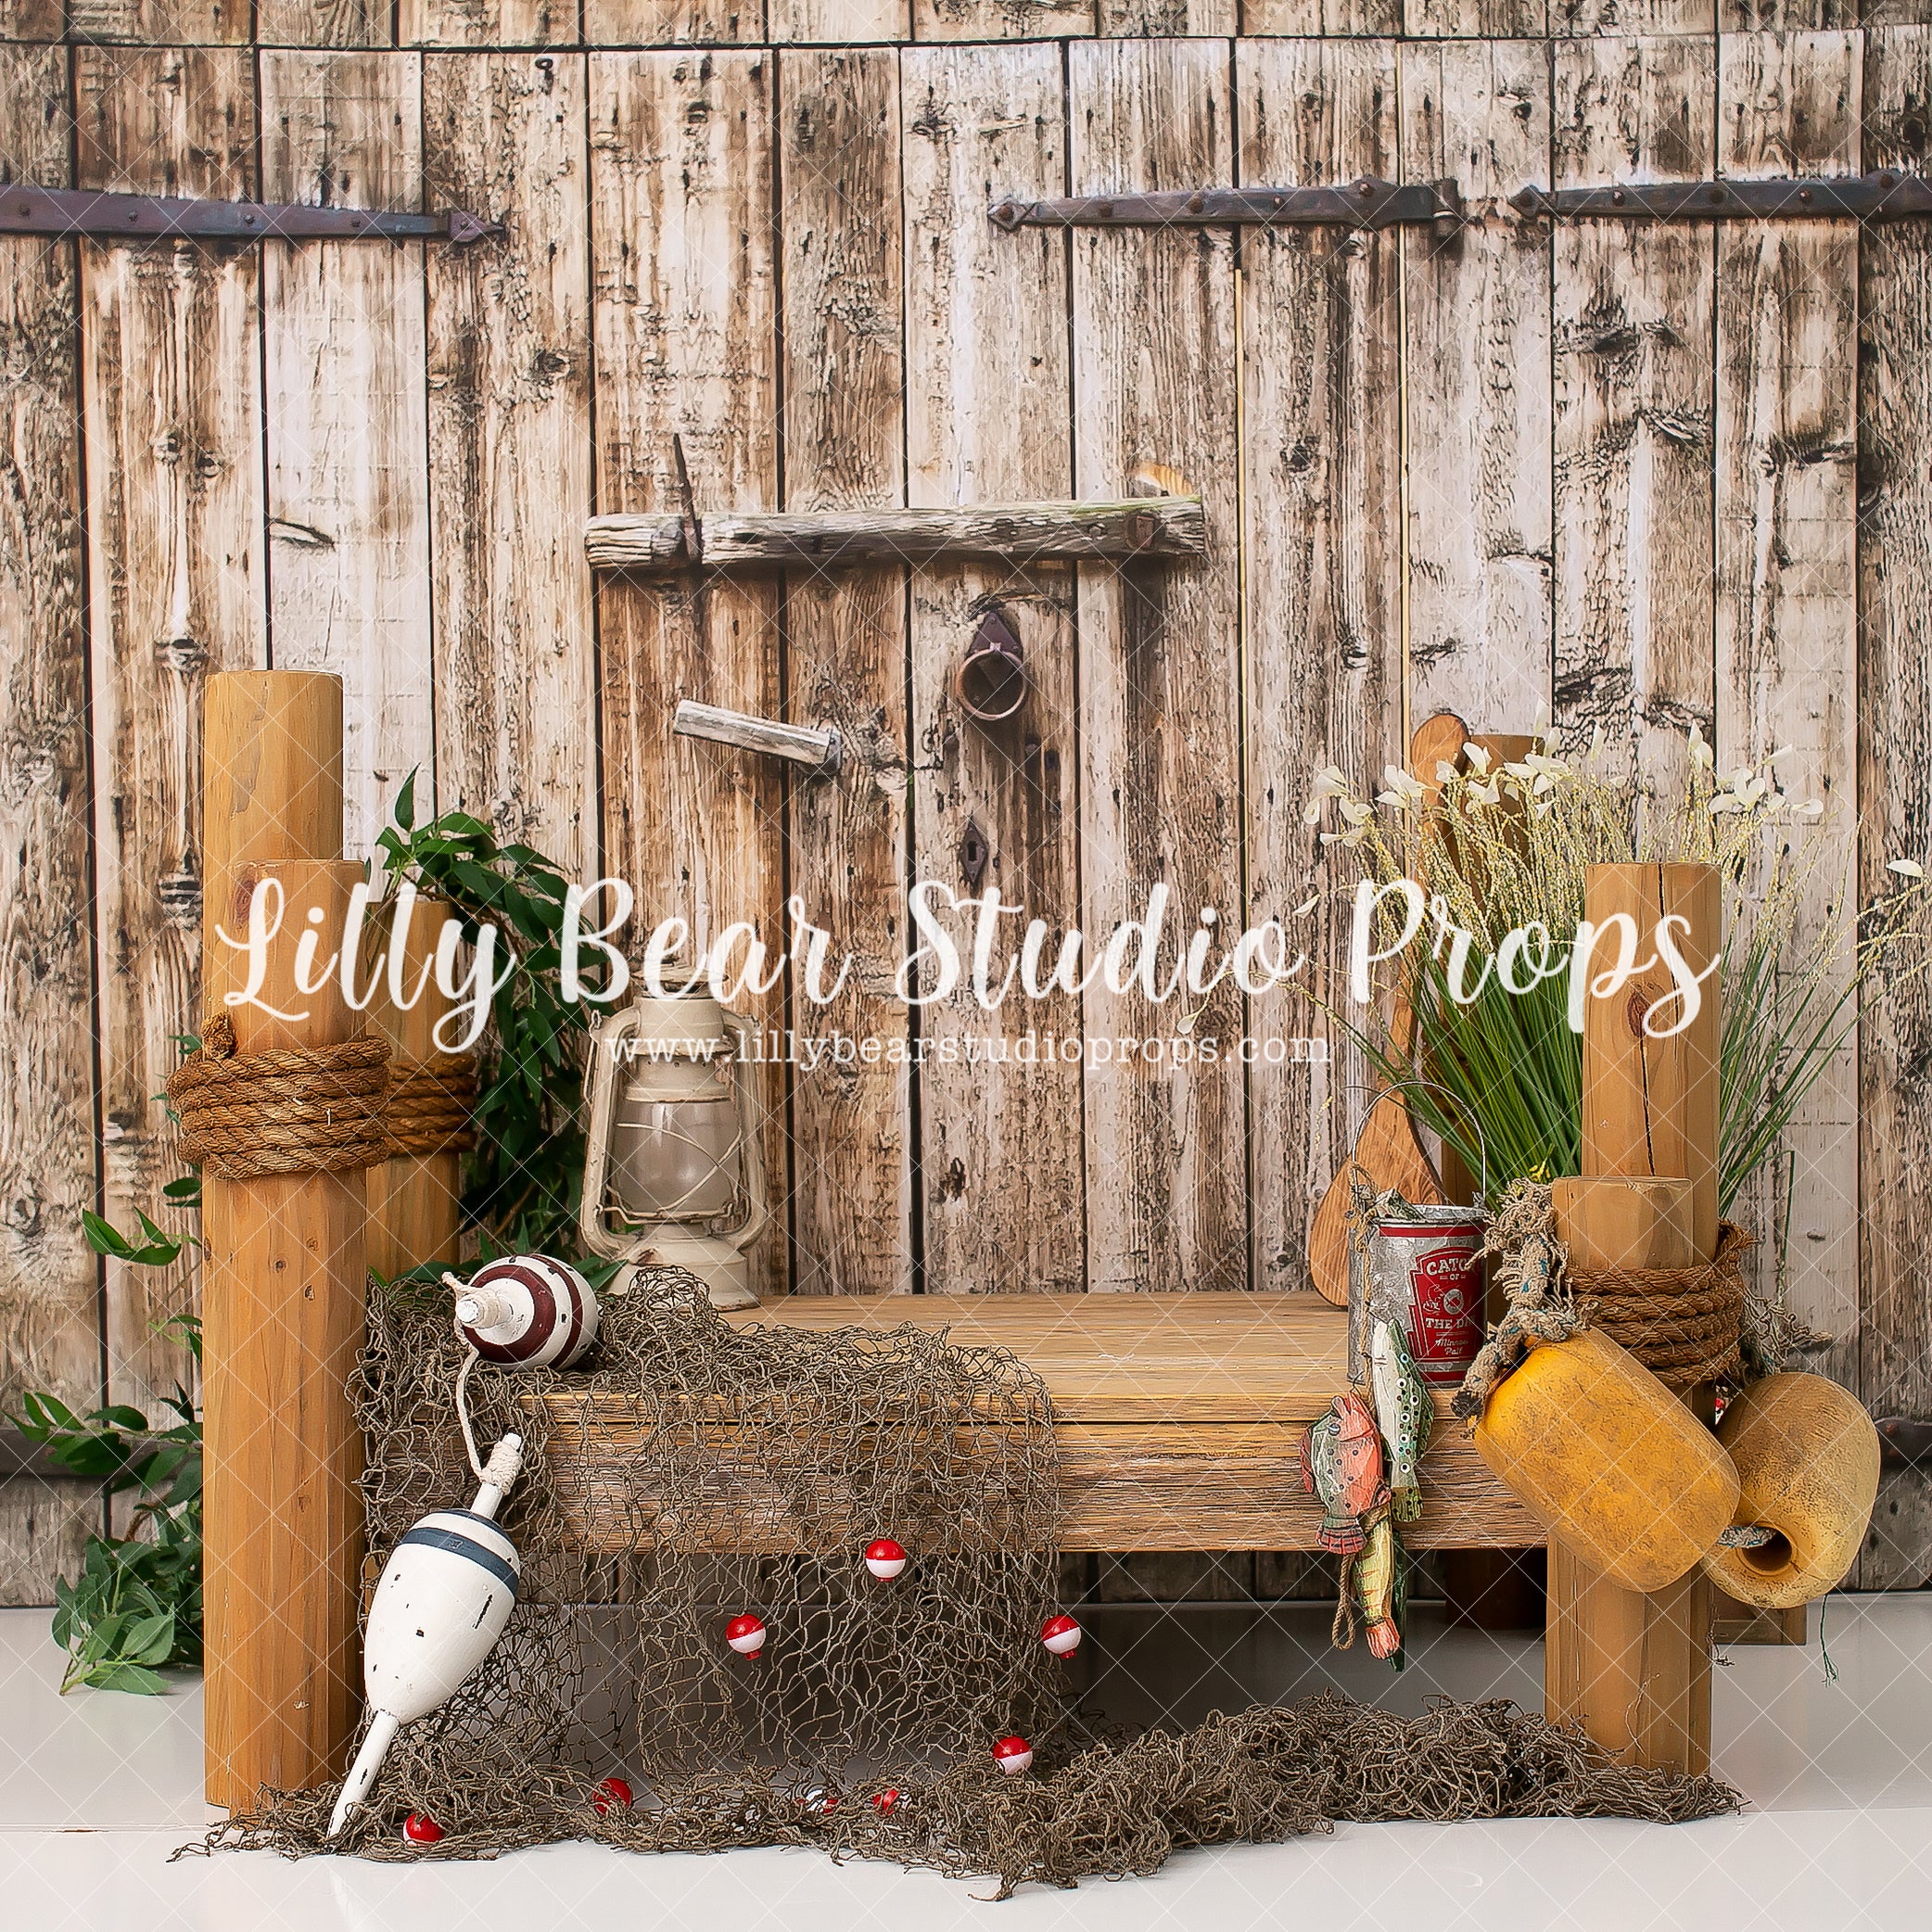 Fishing Dock – Lilly Bear Studio Props